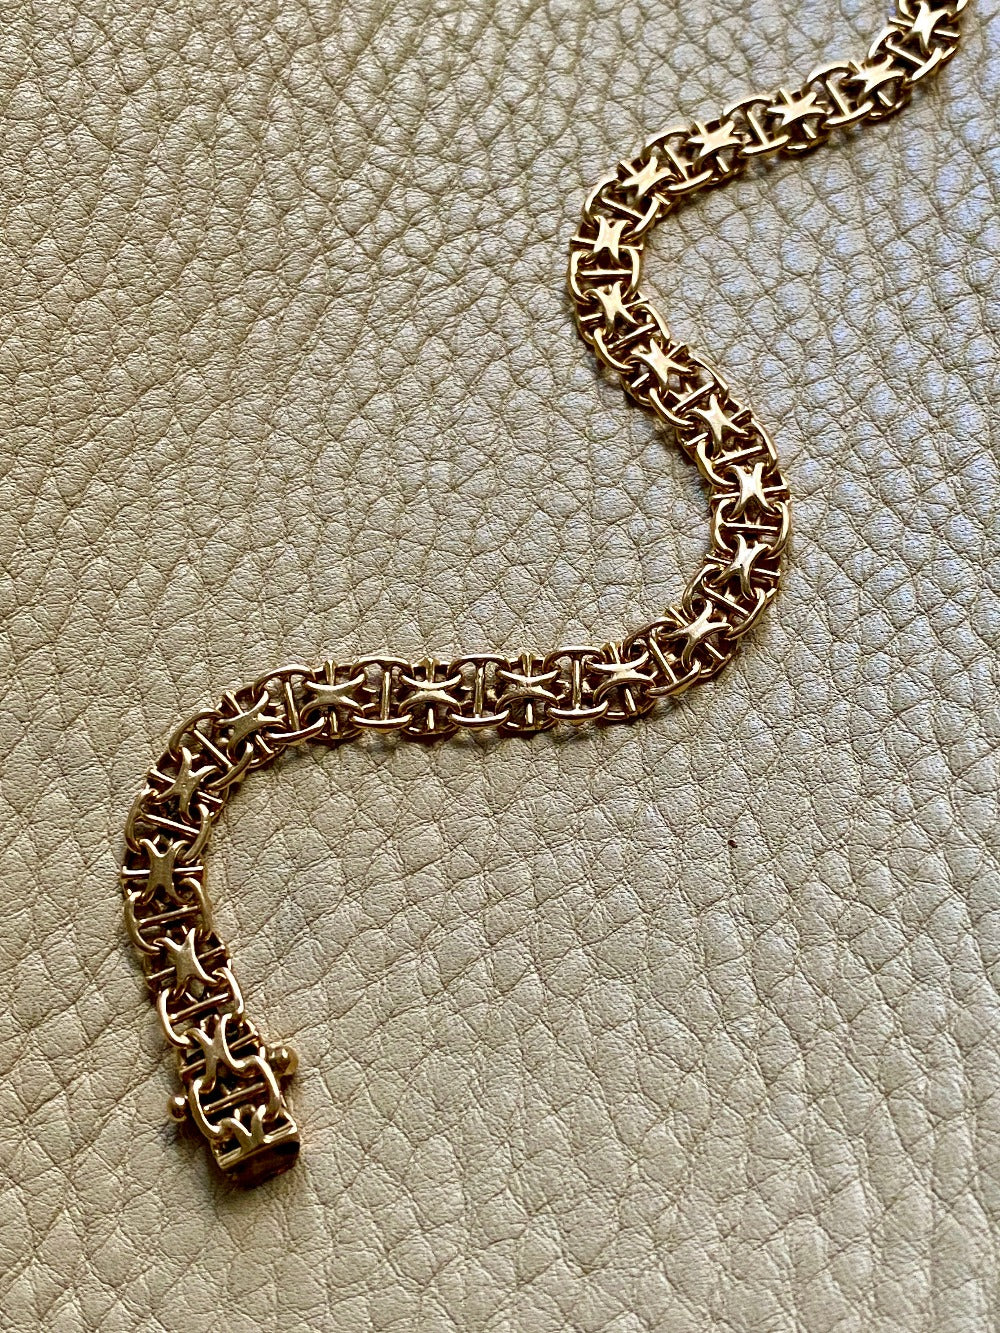 1962 Star link with bars - Bracelet in 18k gold - 7.25 inch length